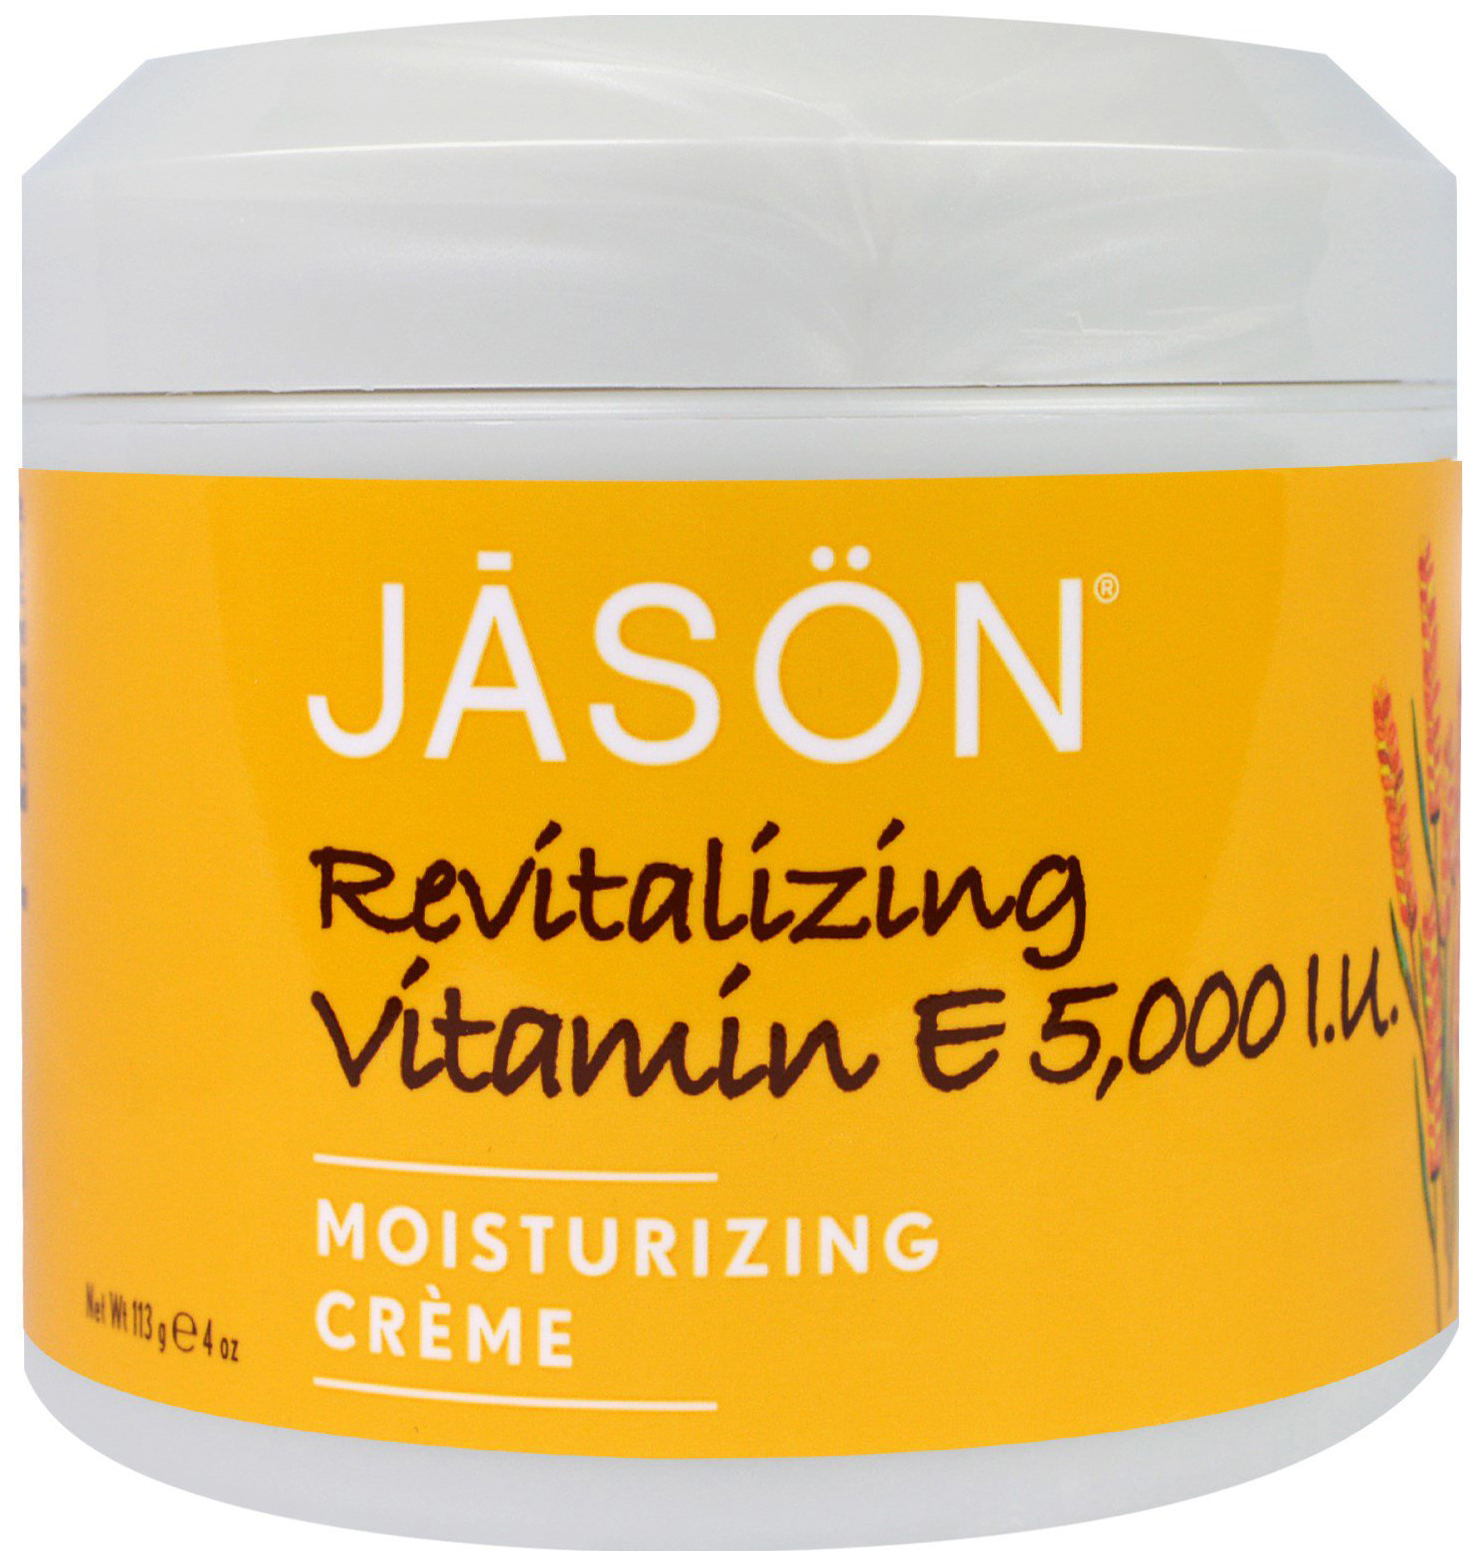 Крем для лица Jason Revitalizing Vitamin E Creme 5,000 IU крем для рук коа и сладкий миндаль koa sweet almond hydrating herbal hand creme